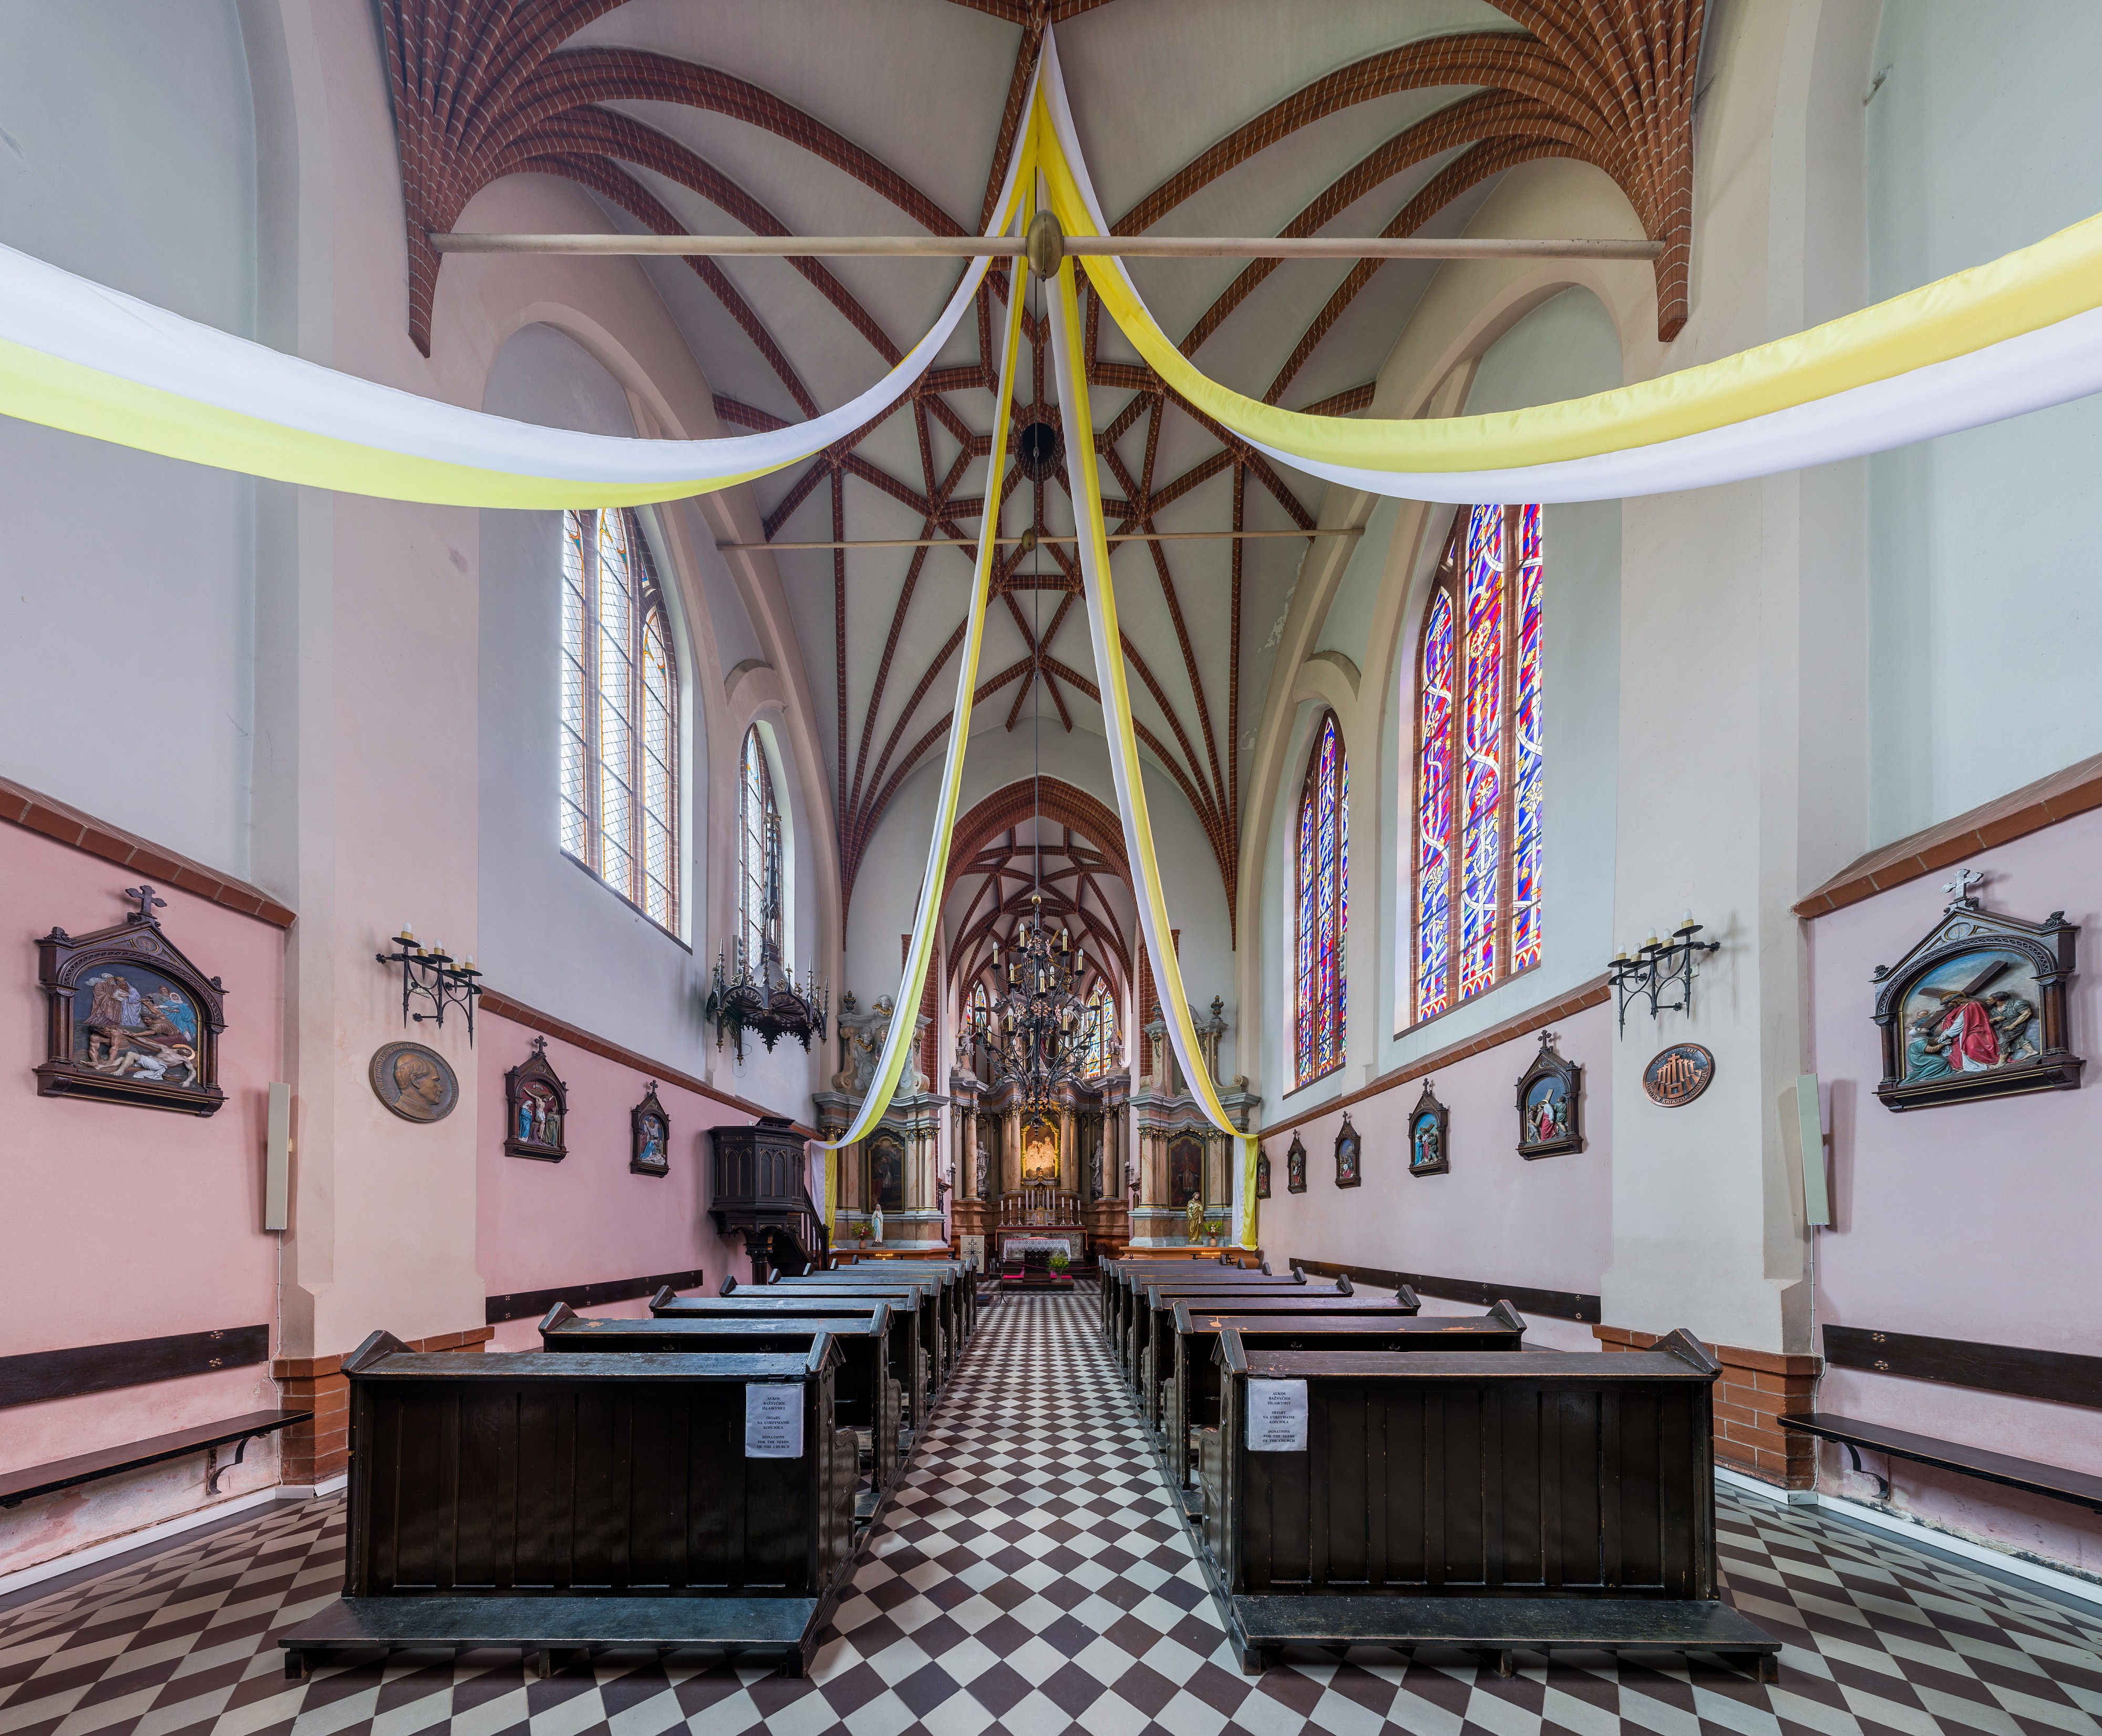 St Anne's Church Interior 2, Vilnius, Lithuania - Diliff